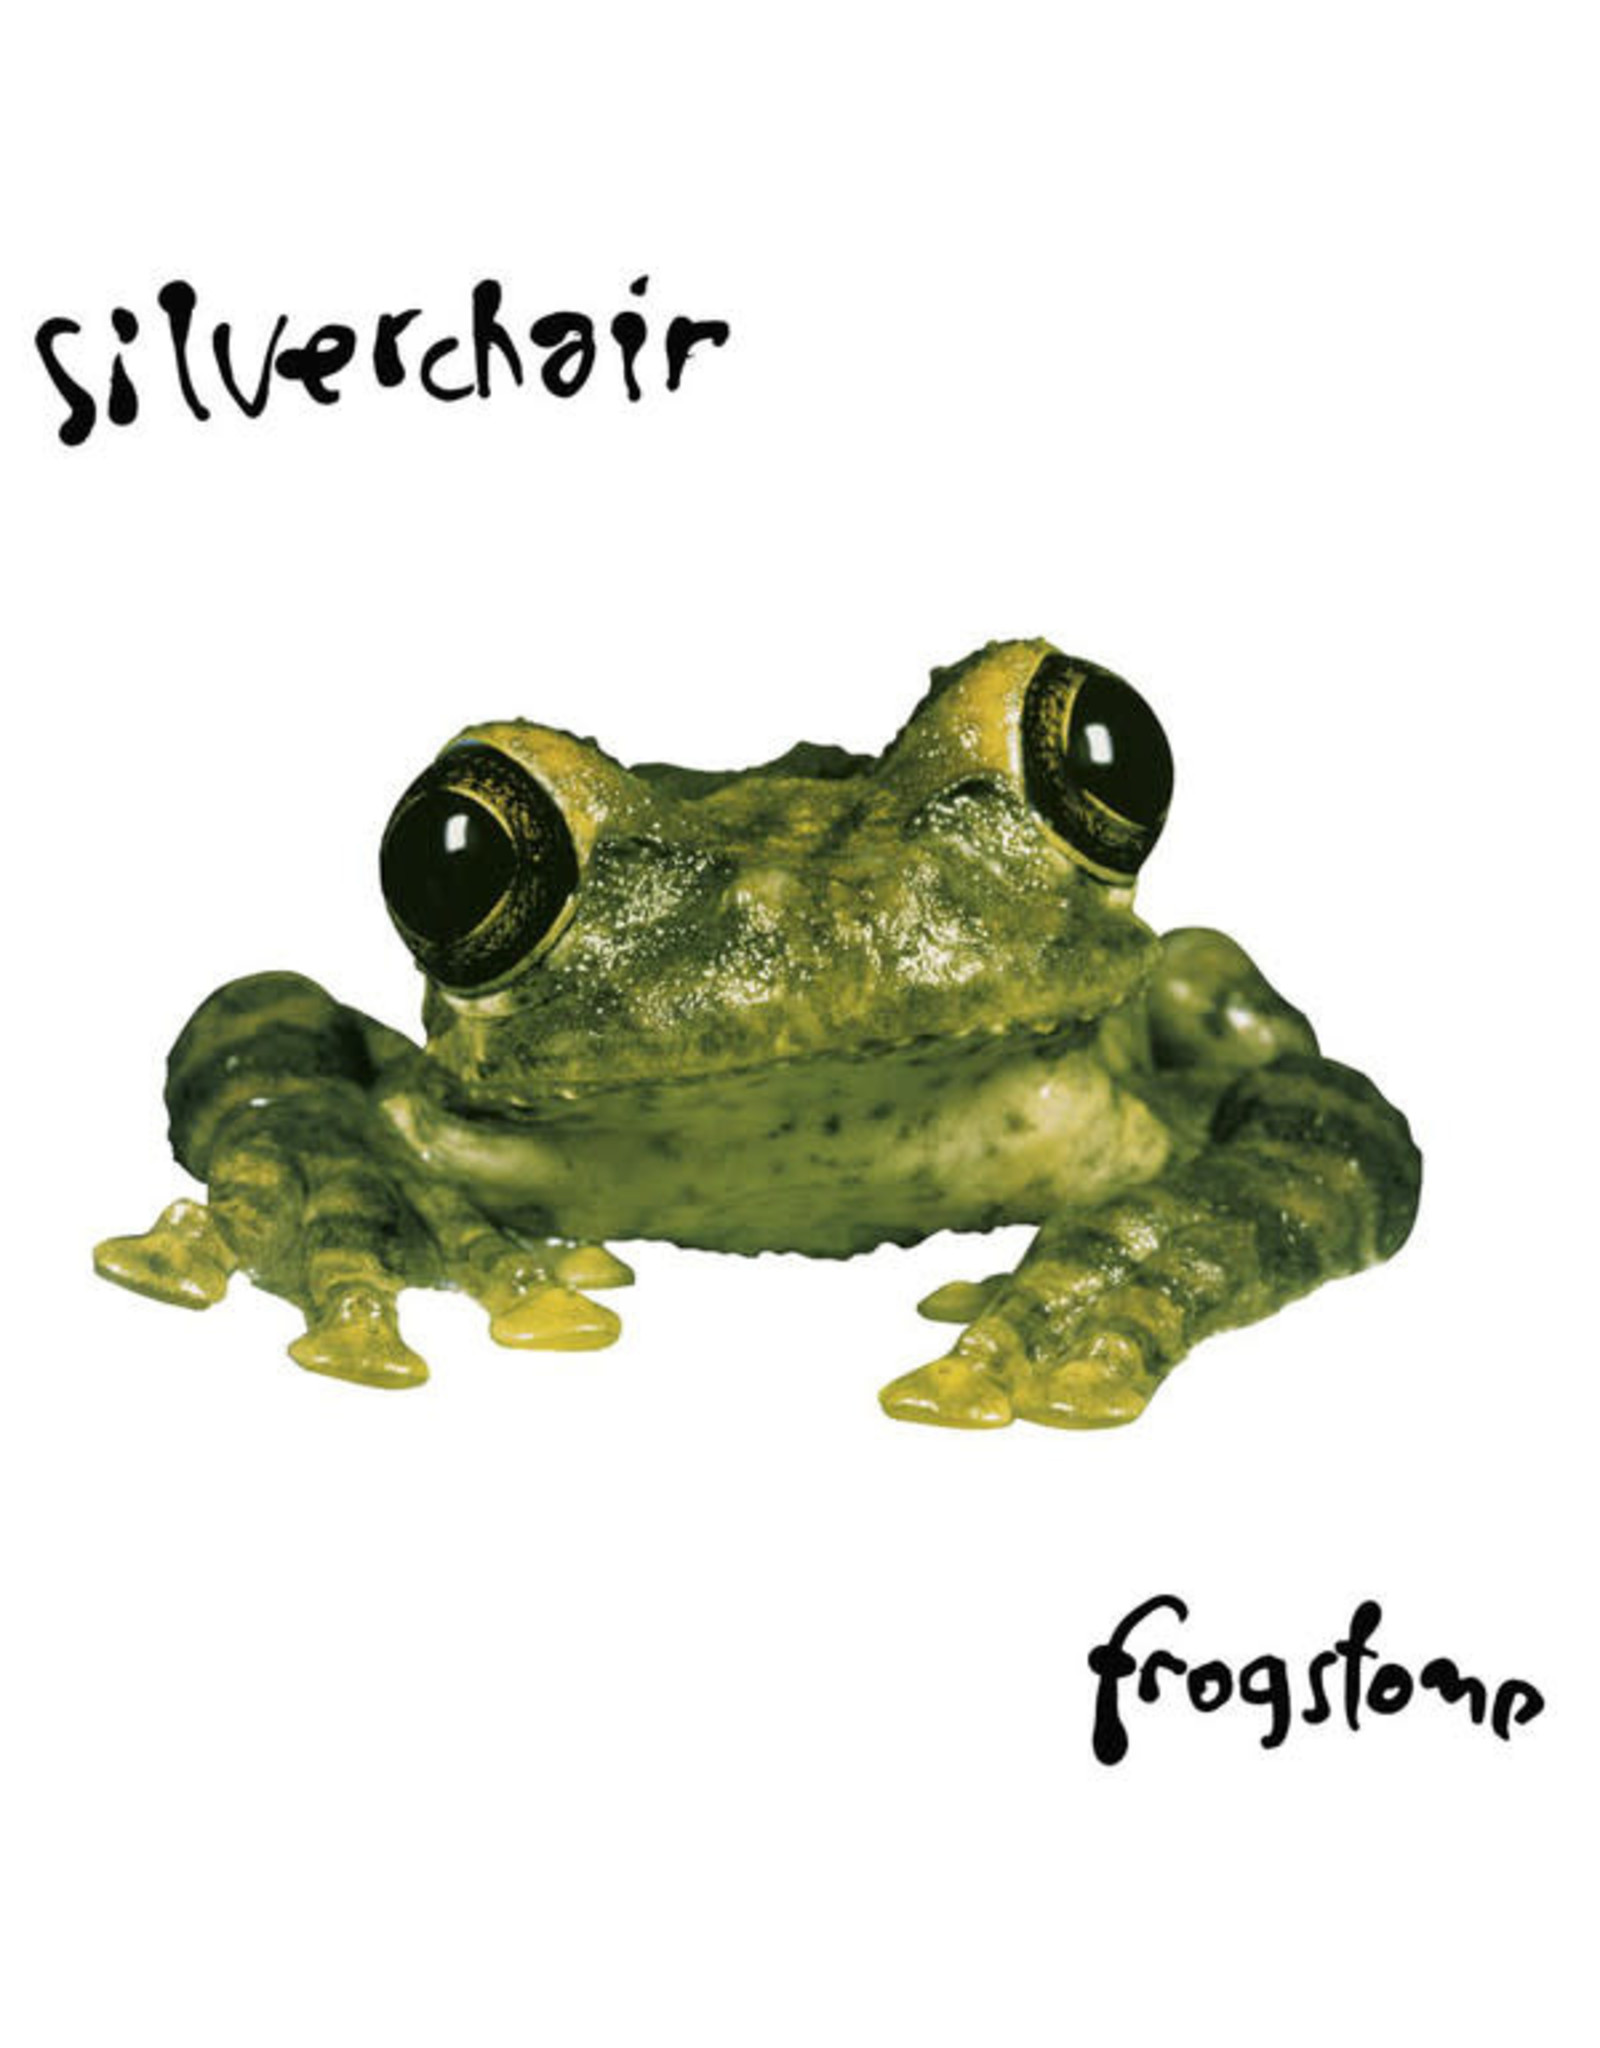 Silverchair - Frogstomp (Music On Vinyl) [Crystal Clear Vinyl]